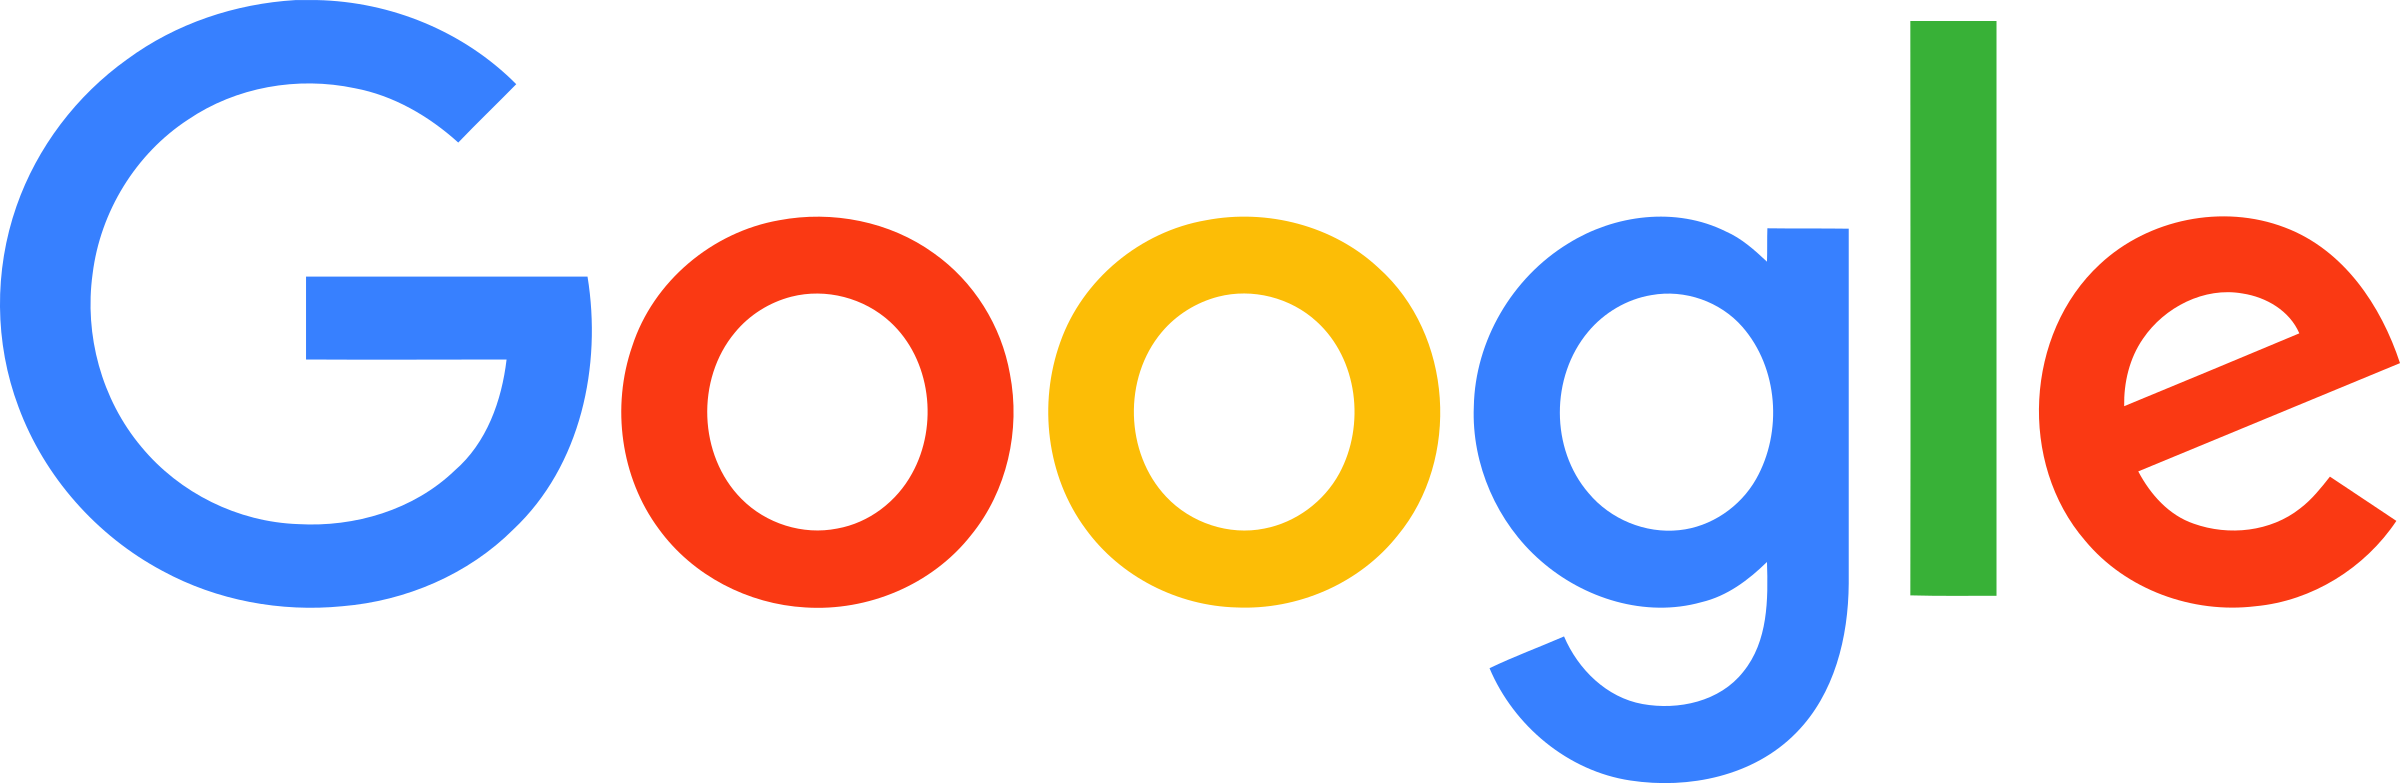 Google 2015 Logo PNG Transparent & SVG Vector - Freebie Supply - Google Logo Vector